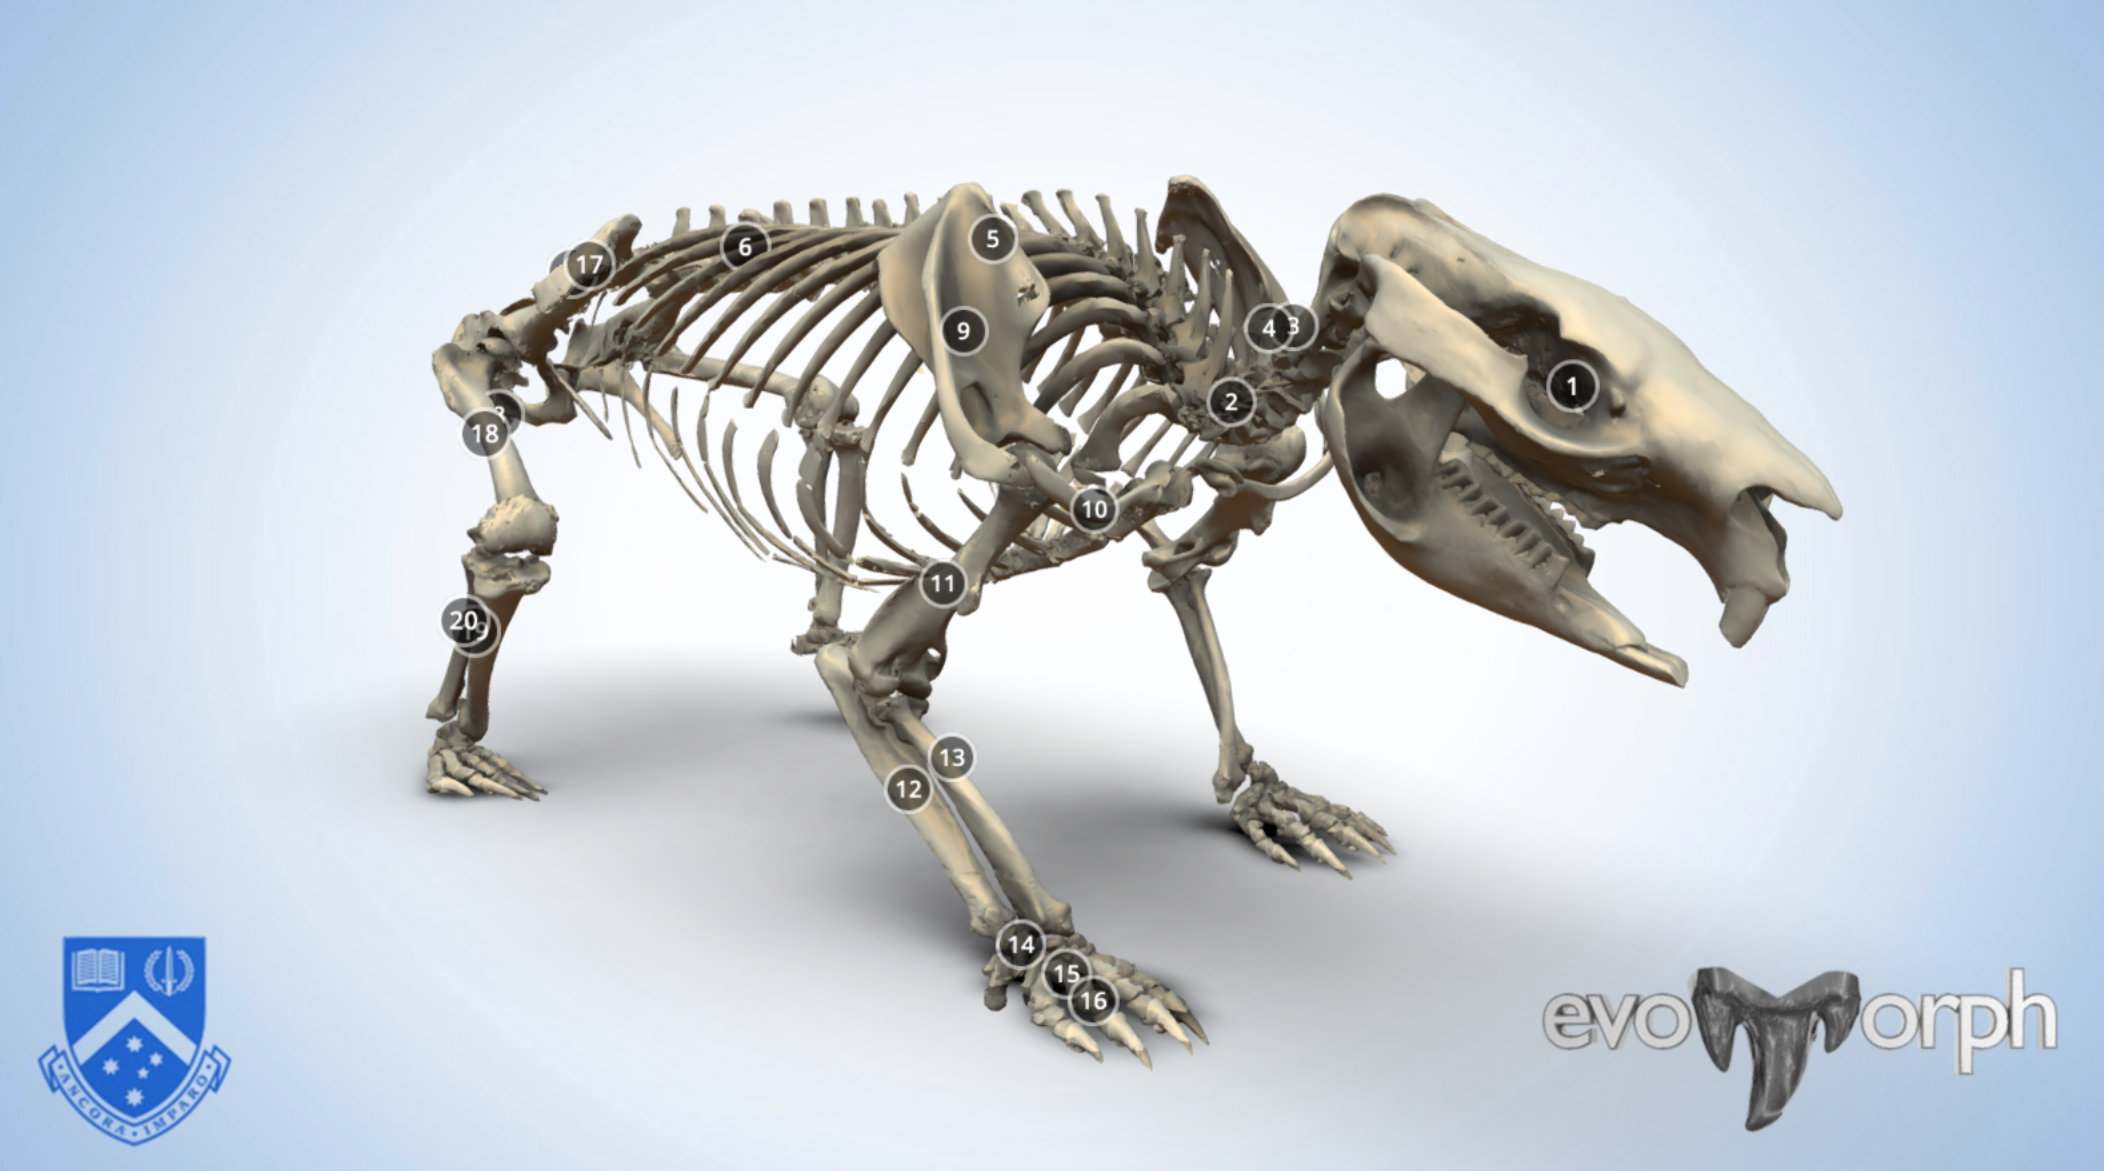 Skeletons in 3D — Evans EvoMorph Lab